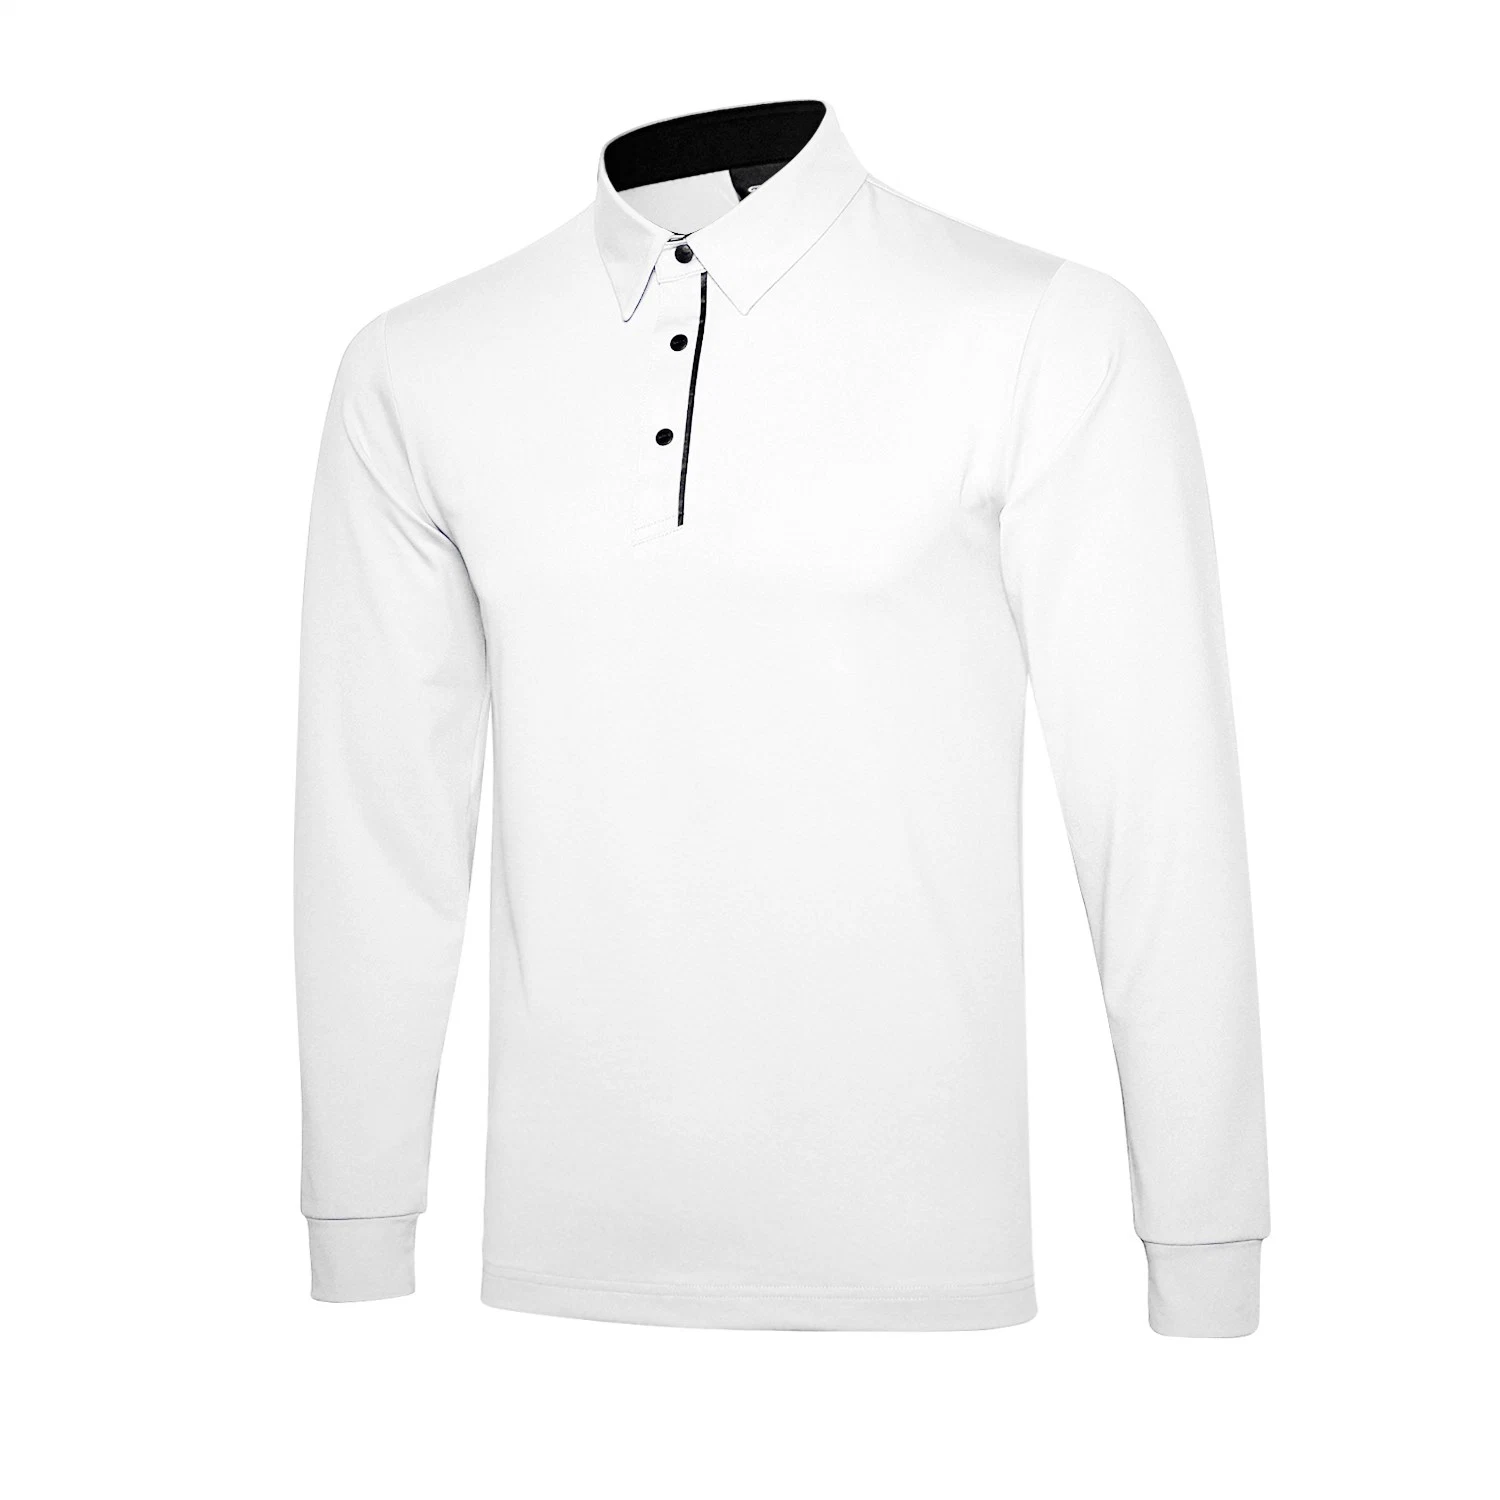 Großhandel/Lieferant Golf Bekleidung Herrenbekleidung Sport Polo Shirt Langarm